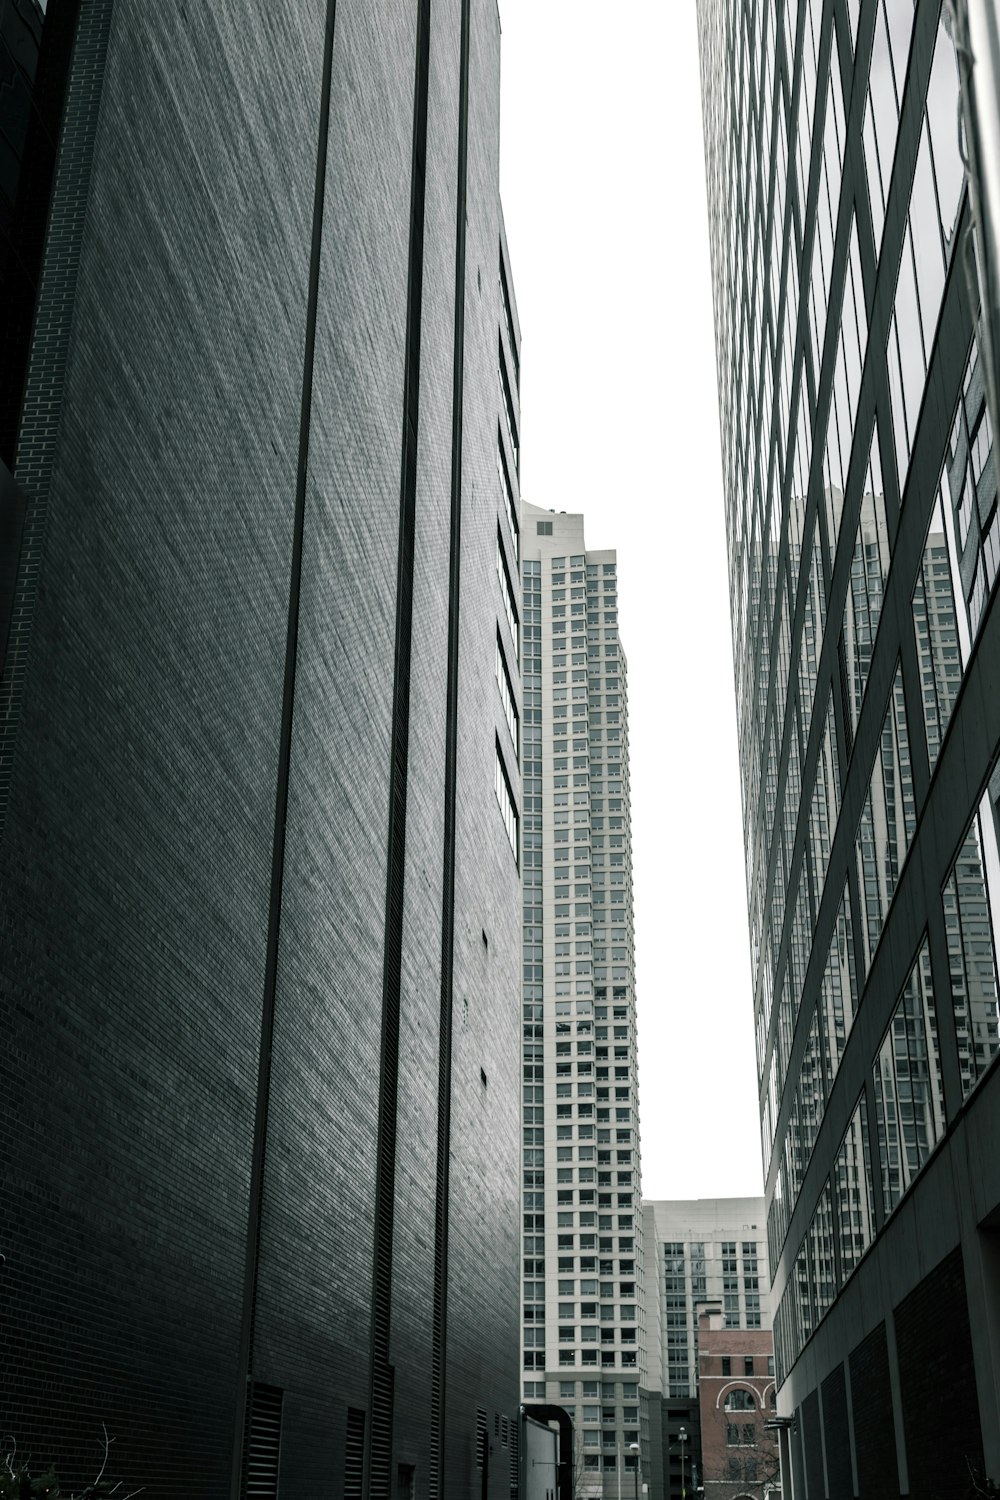 alley between buildings